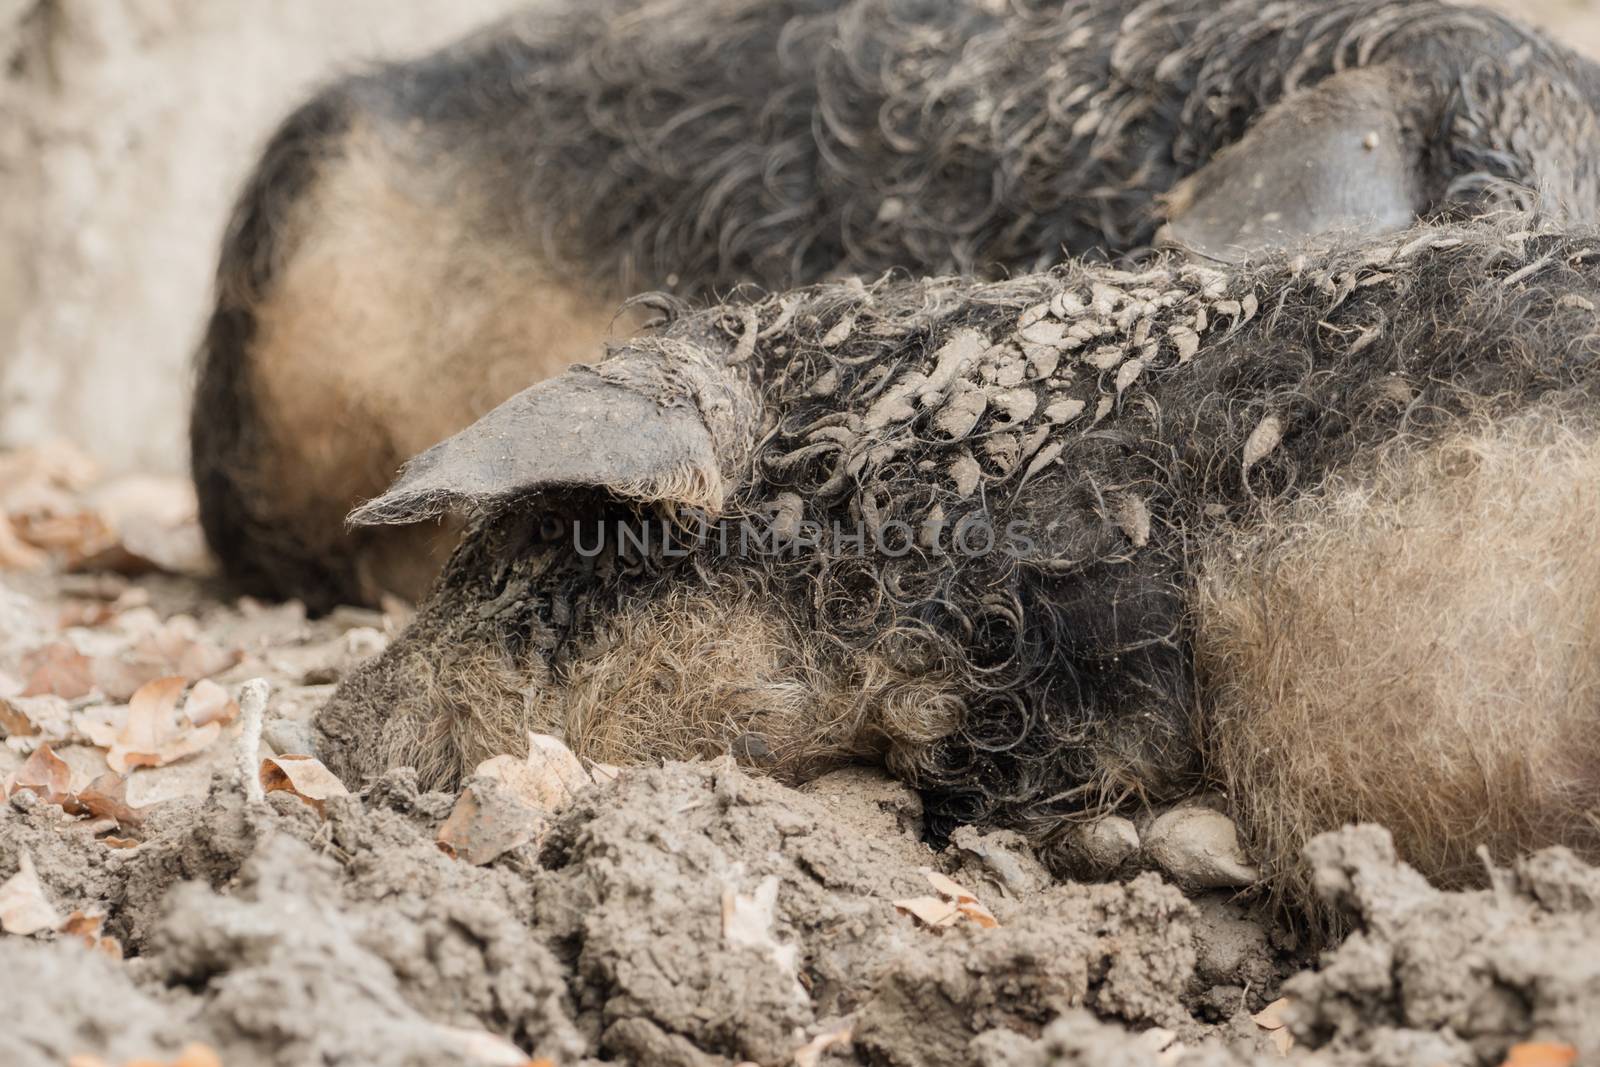 A pig is sleeping in the mud